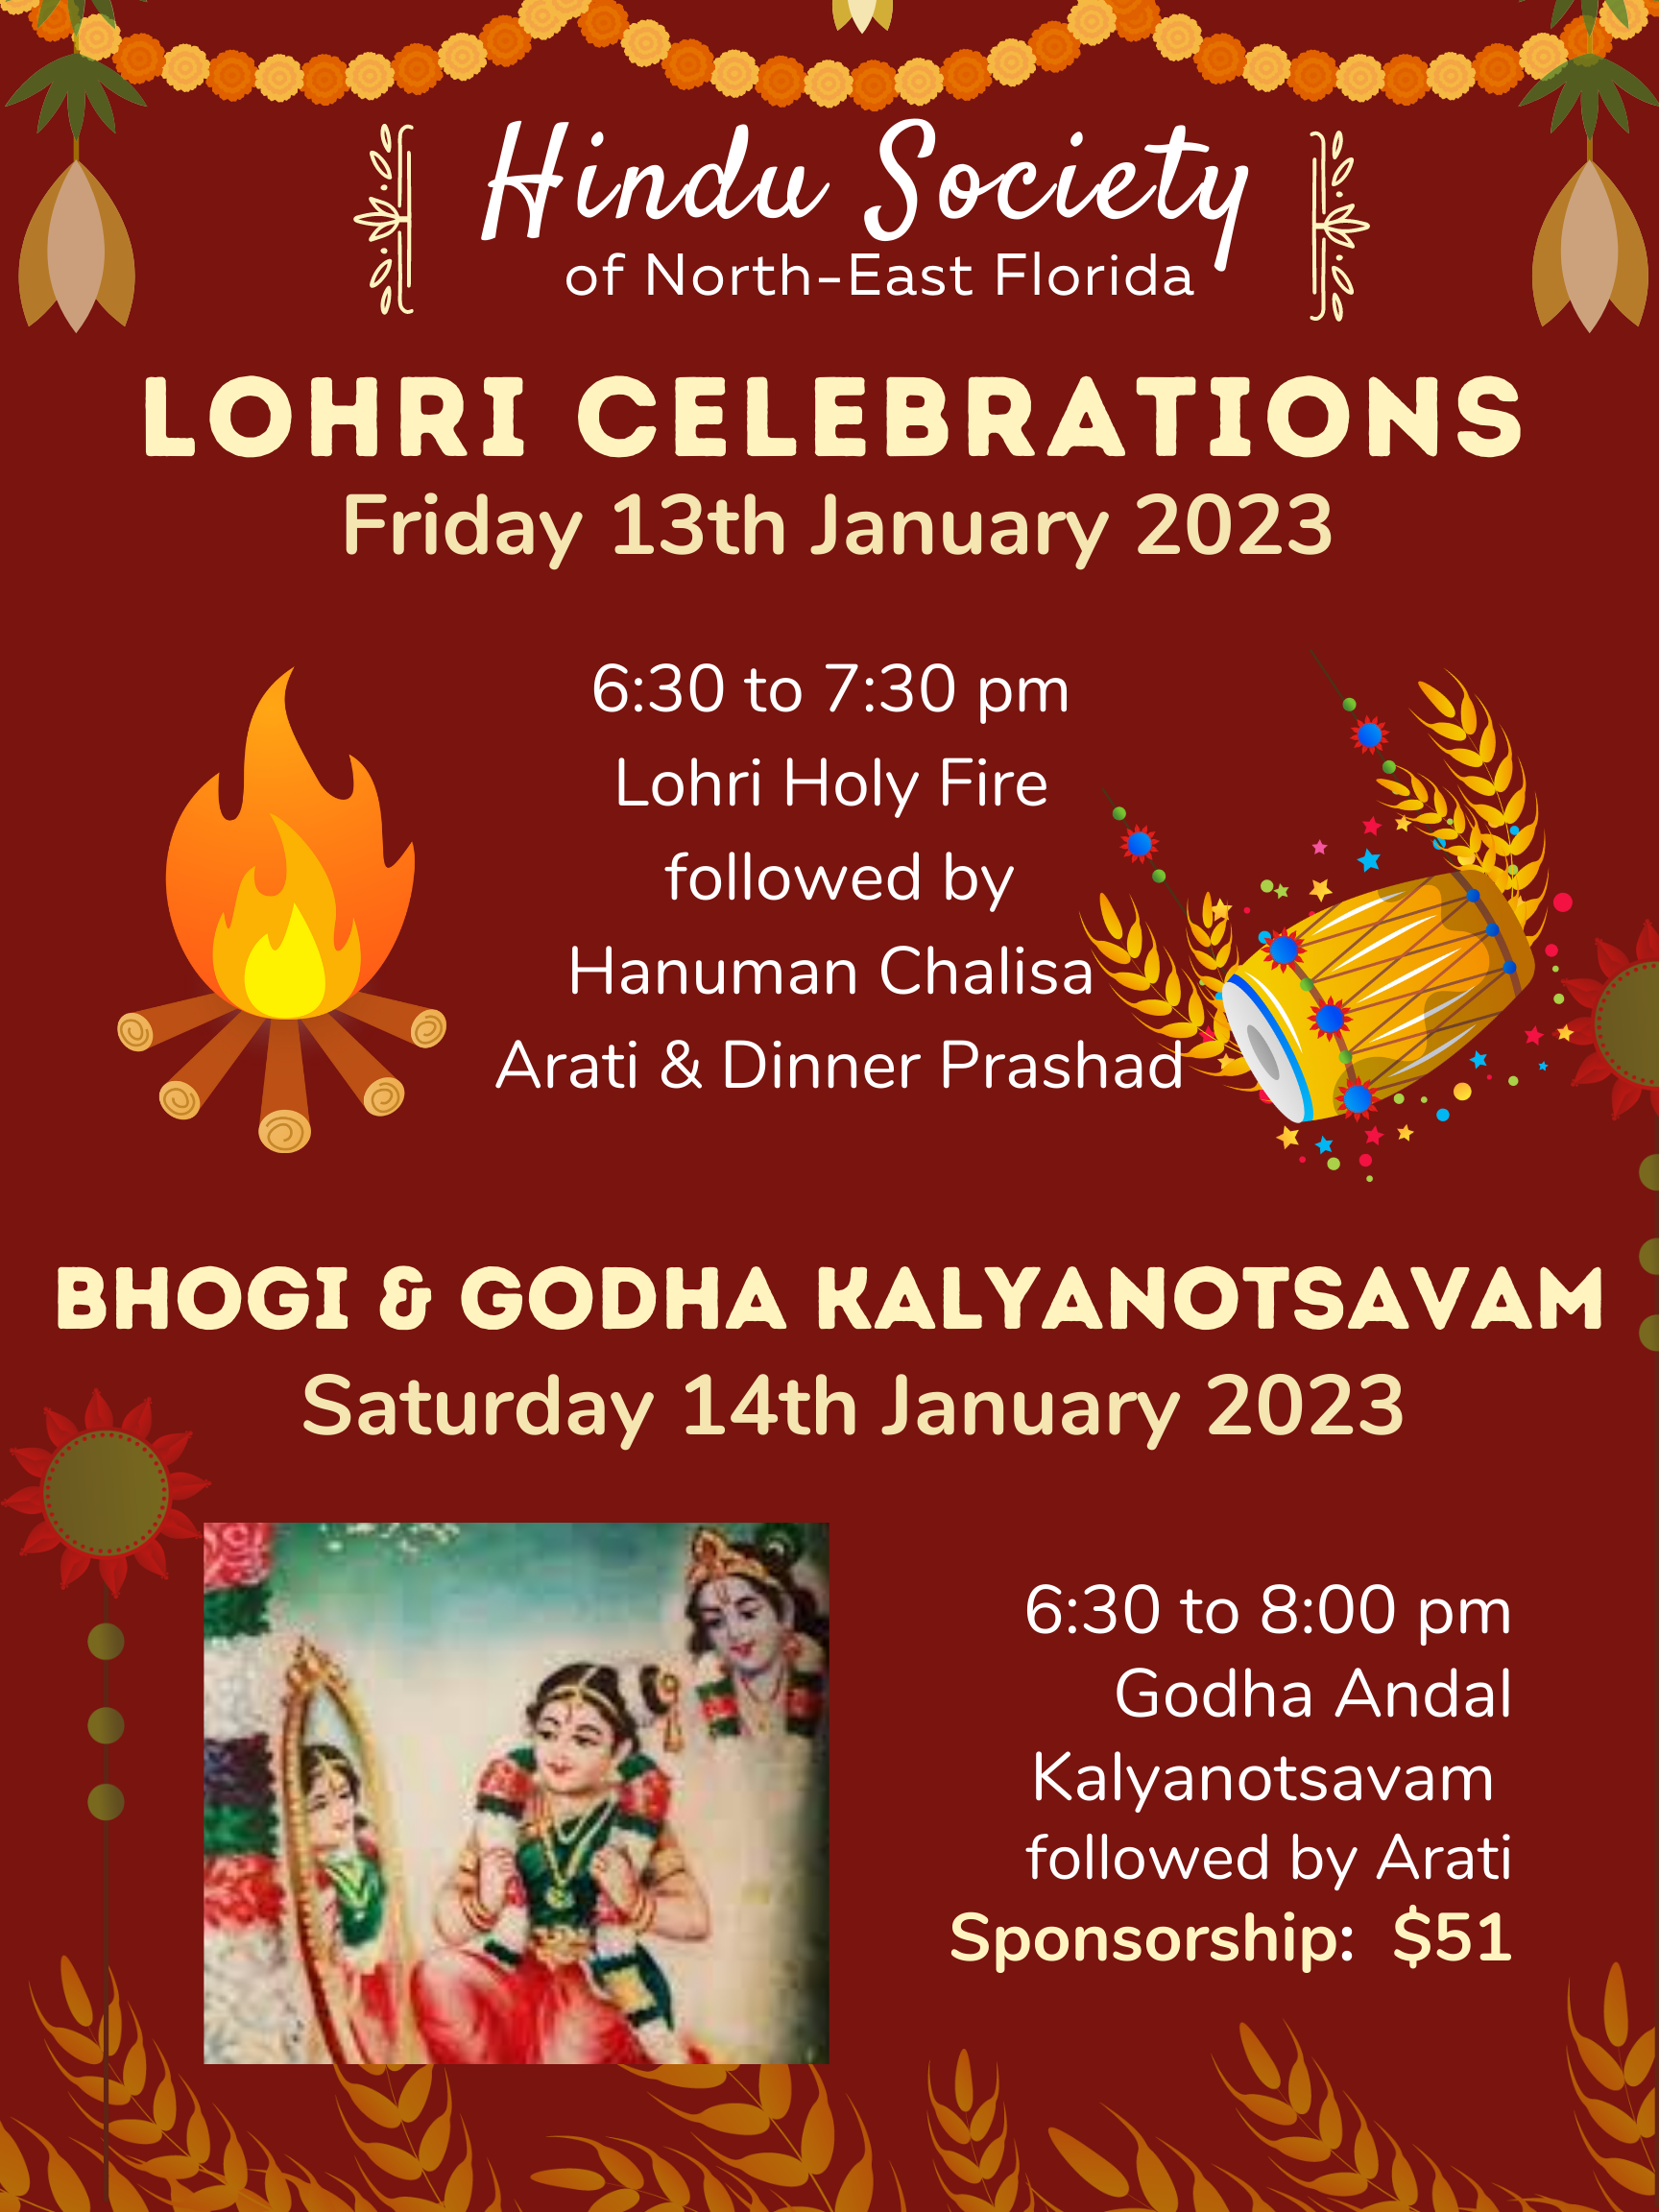 LOHRI CELEBRATIONS Friday 13th January 2023 6:30 to 7:30 pm Lohri Holy Fire followed by Hanuman Chalisa Arati & Dinner Prashad BHOGI & GODHA KALYANOTSAVAM Saturday 14th January 2023 6:30 to 8:00 pm Godha Andal Kalvanotsavam followed by Arati Sponsorship: $51